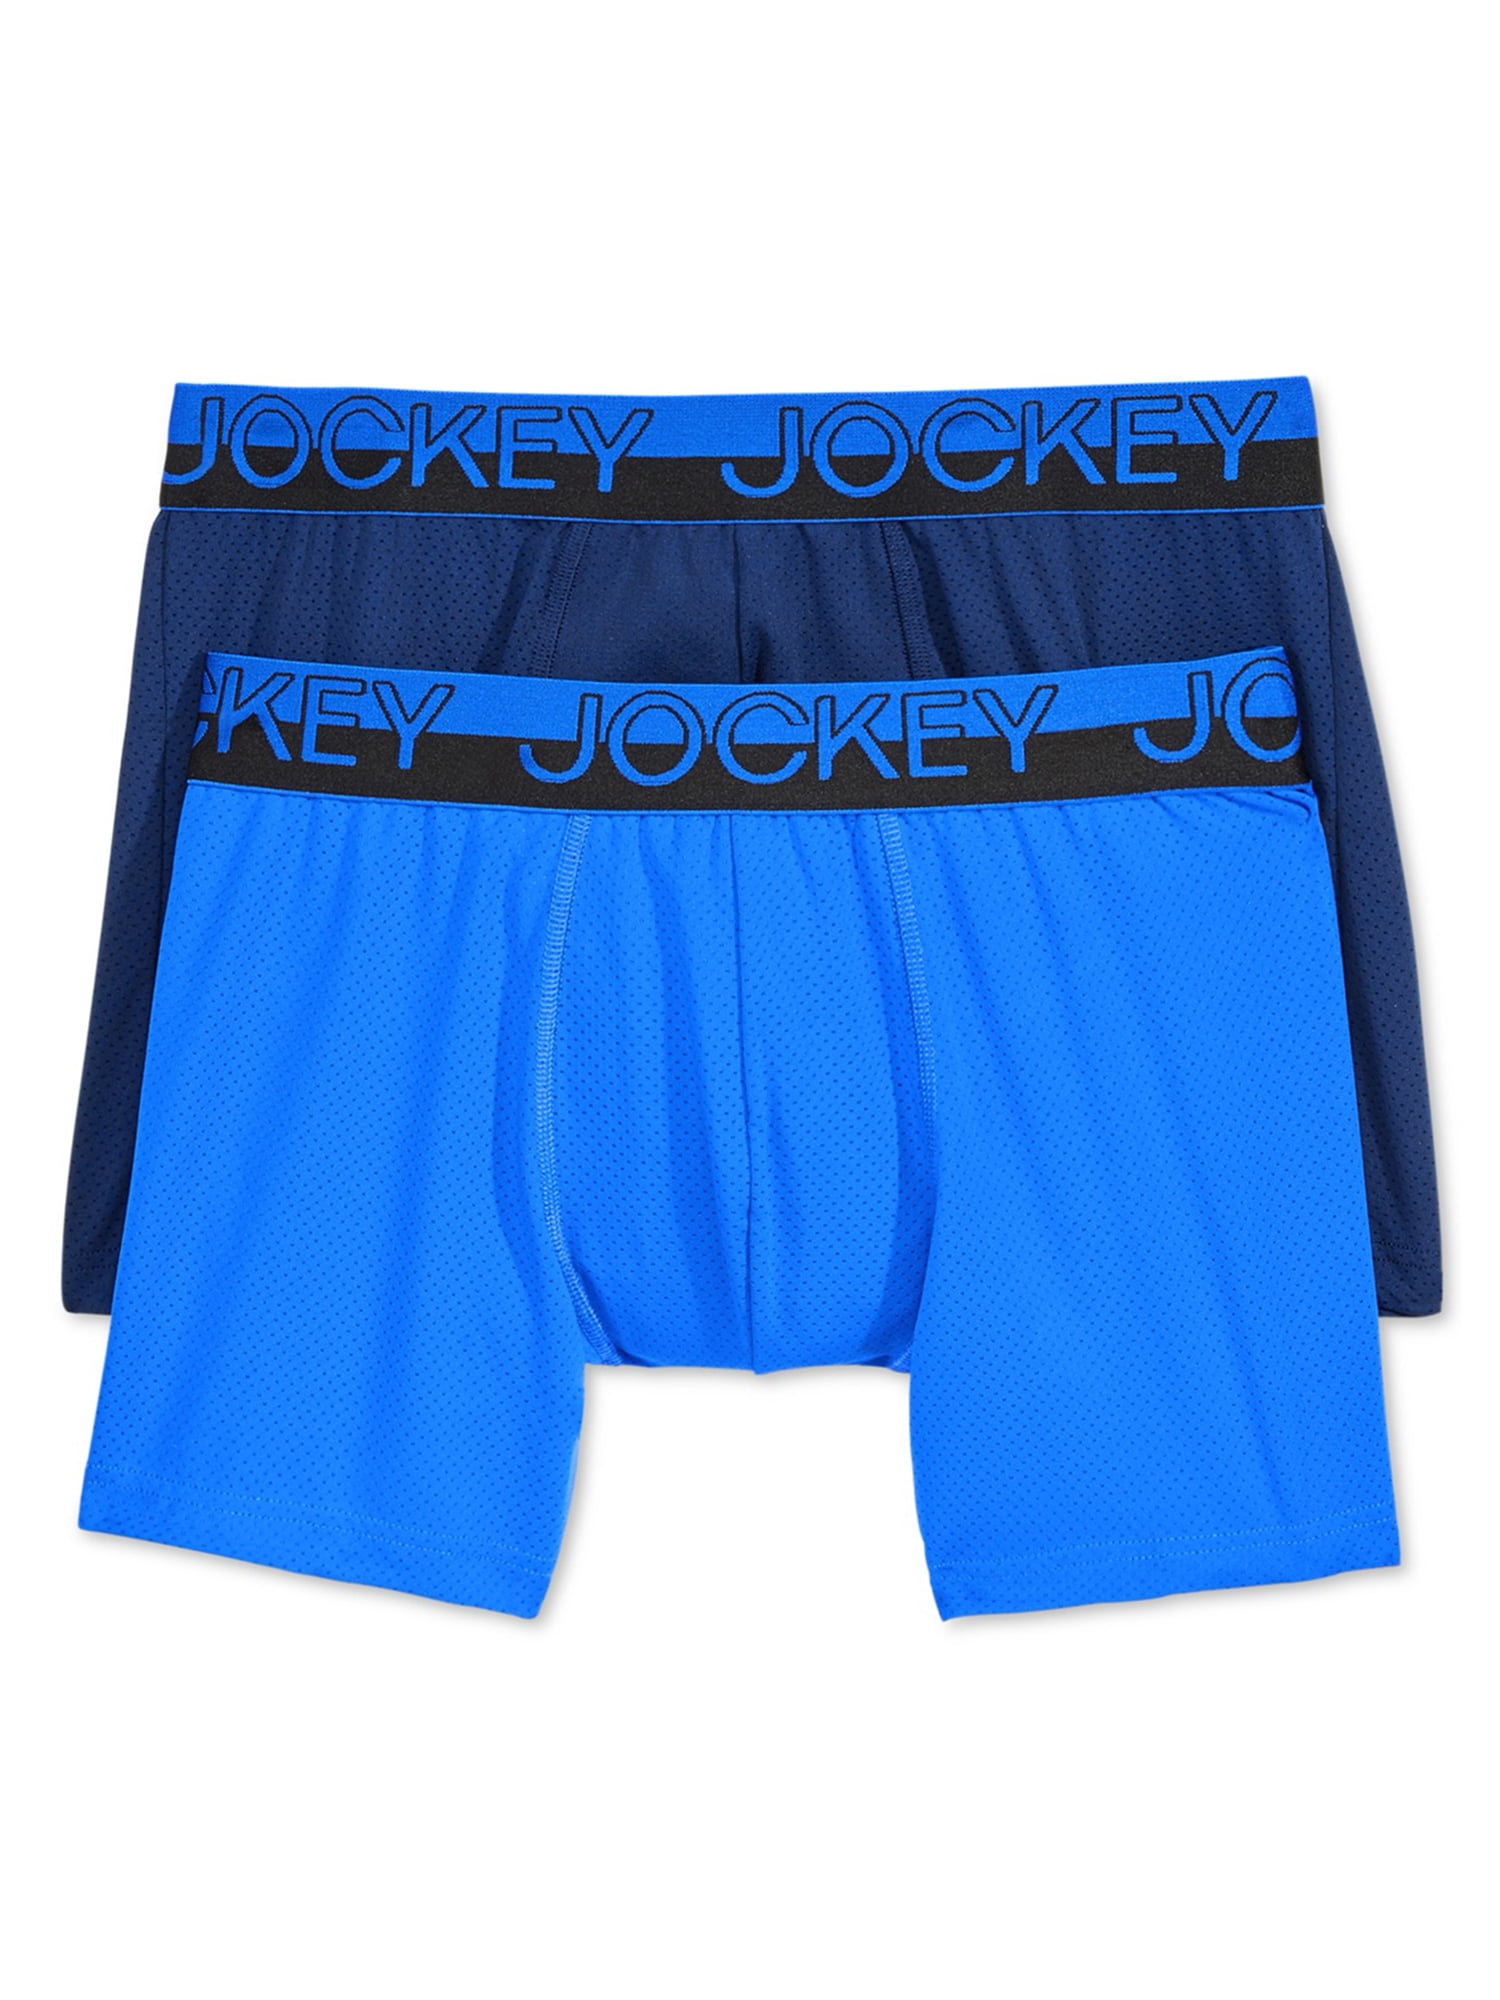 Jockey - Jockey Mens Performance 2 Pack Underwear Boxer Briefs ...